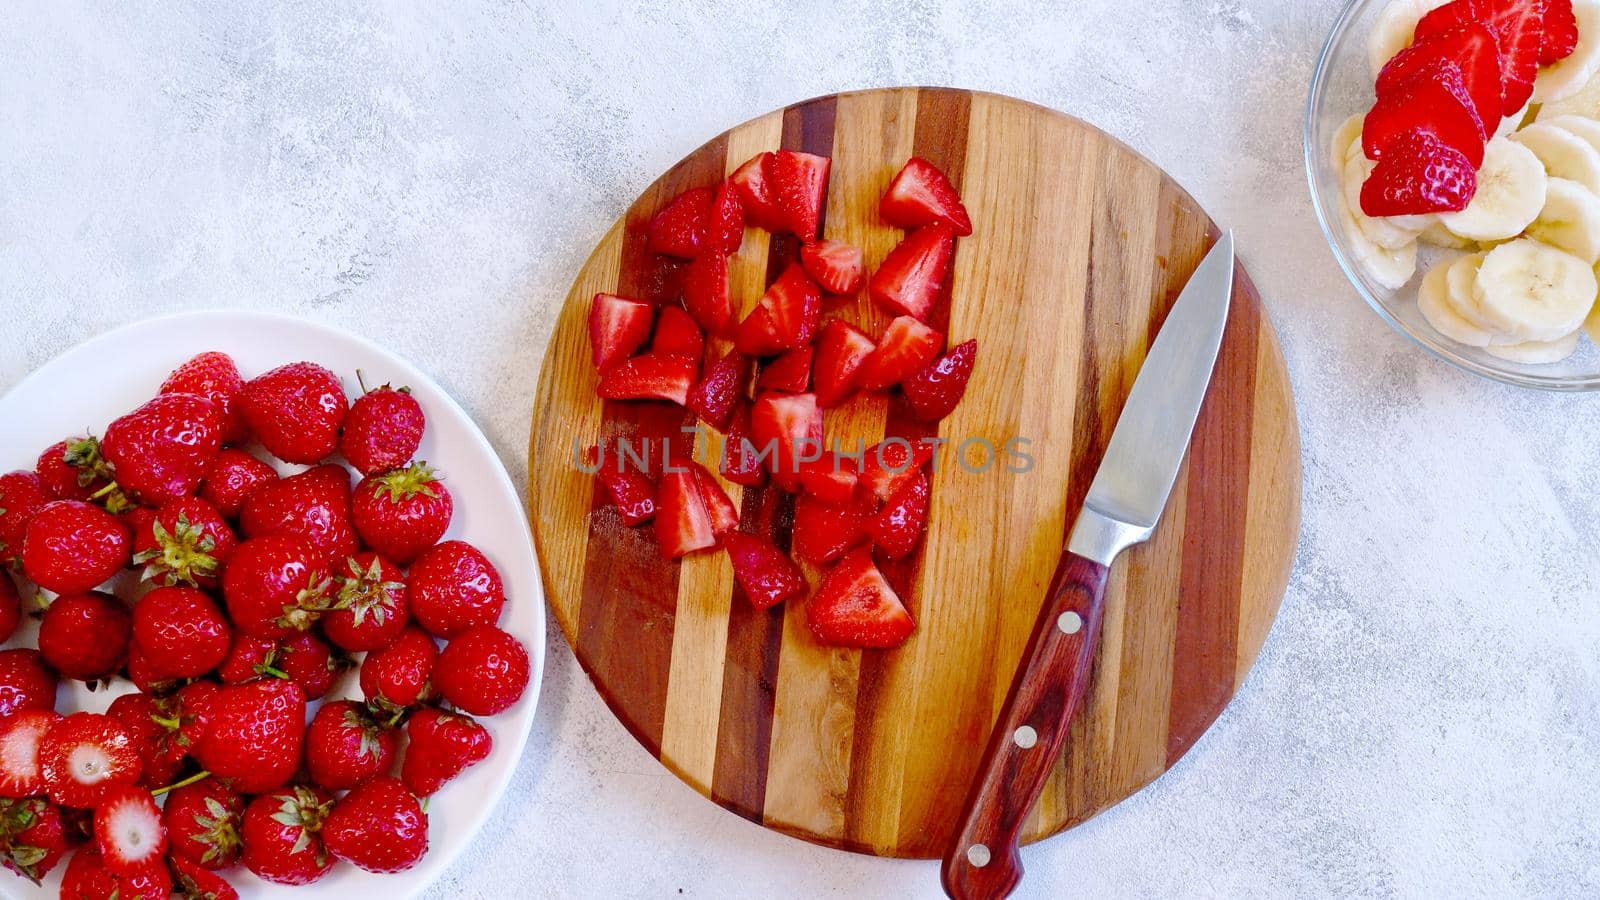 Sliced strawberry on wooden board. Preparing smoothie or milkshake with strawberry and banana by Svetlana_Belozerova